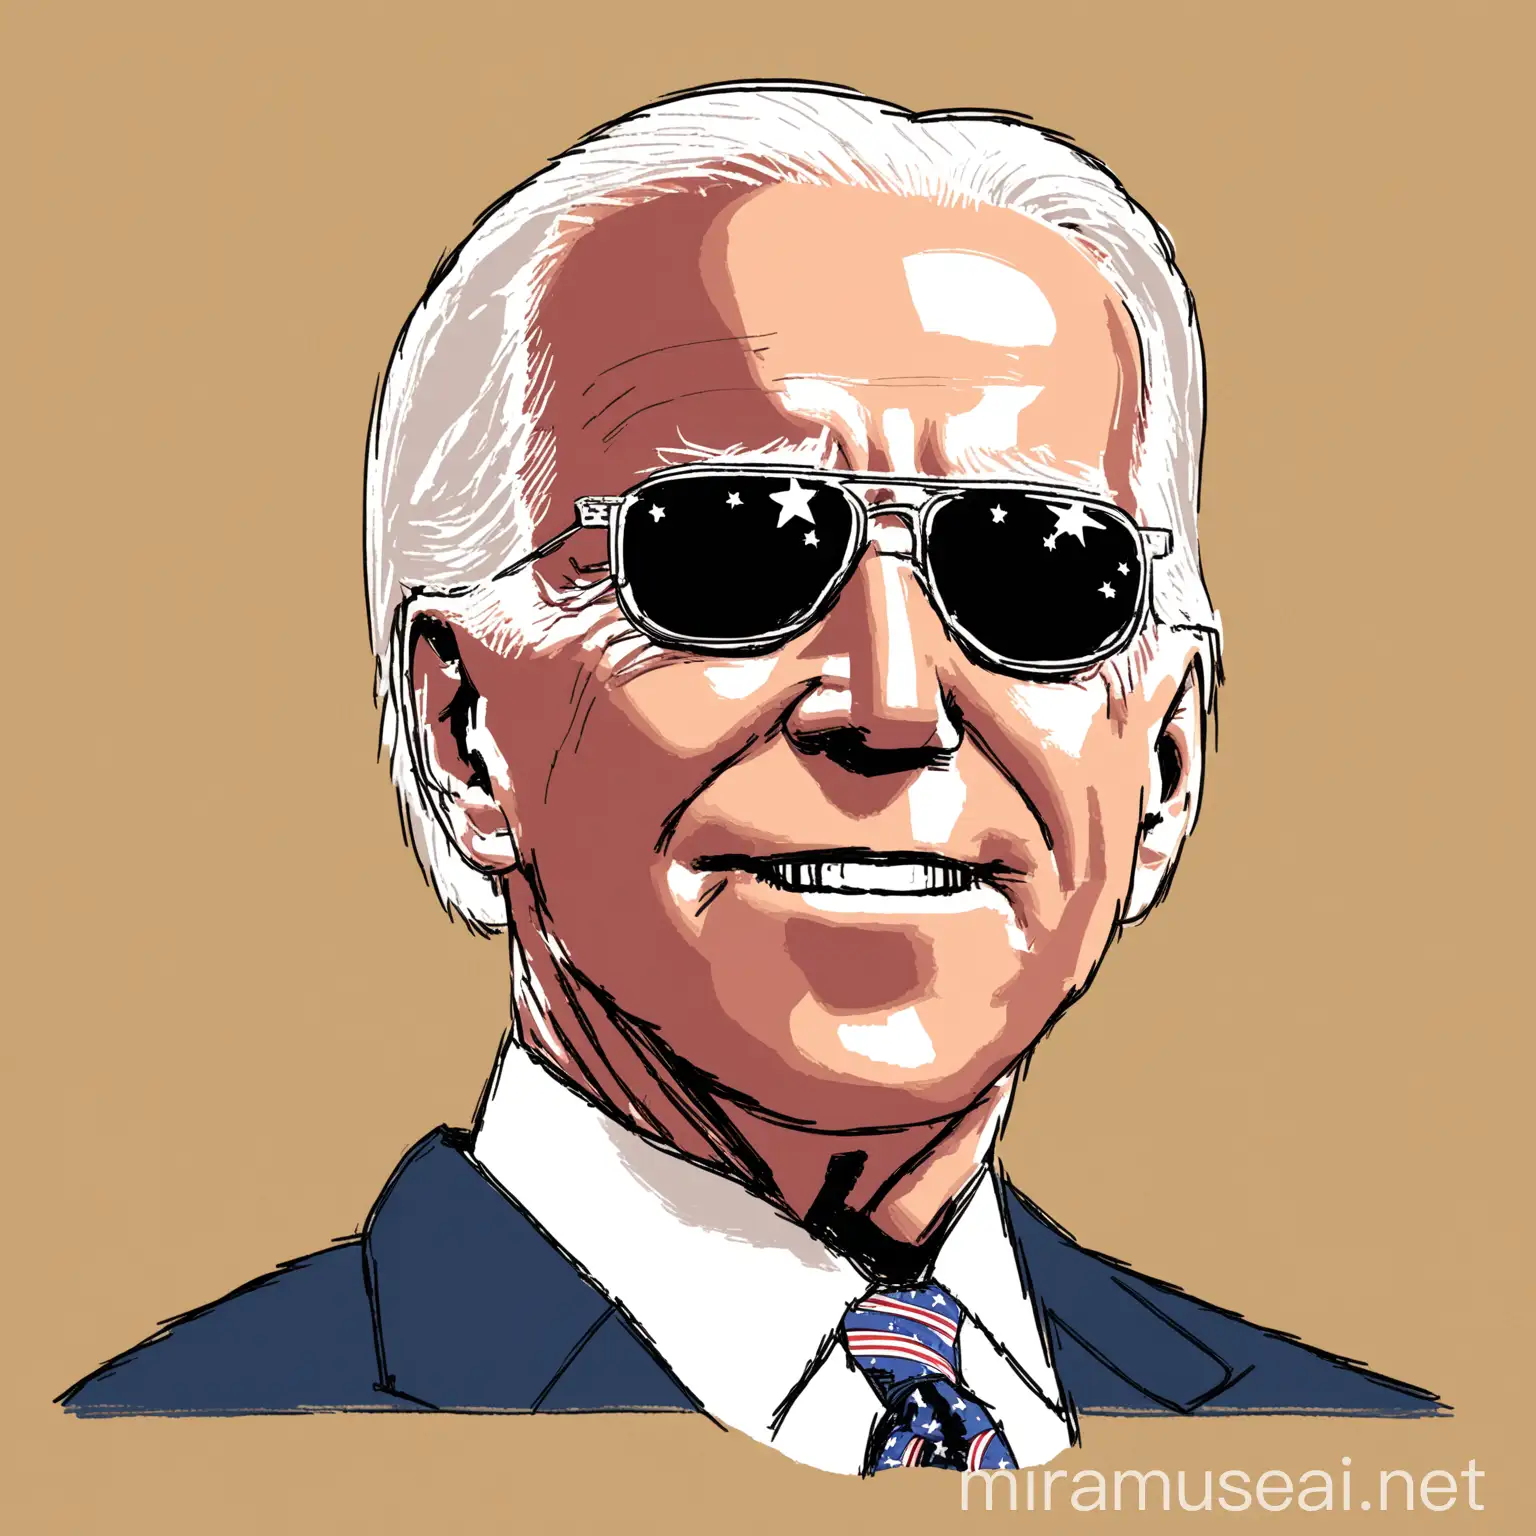 hand-drawn illustration of Joe Biden wears US sunglasses

